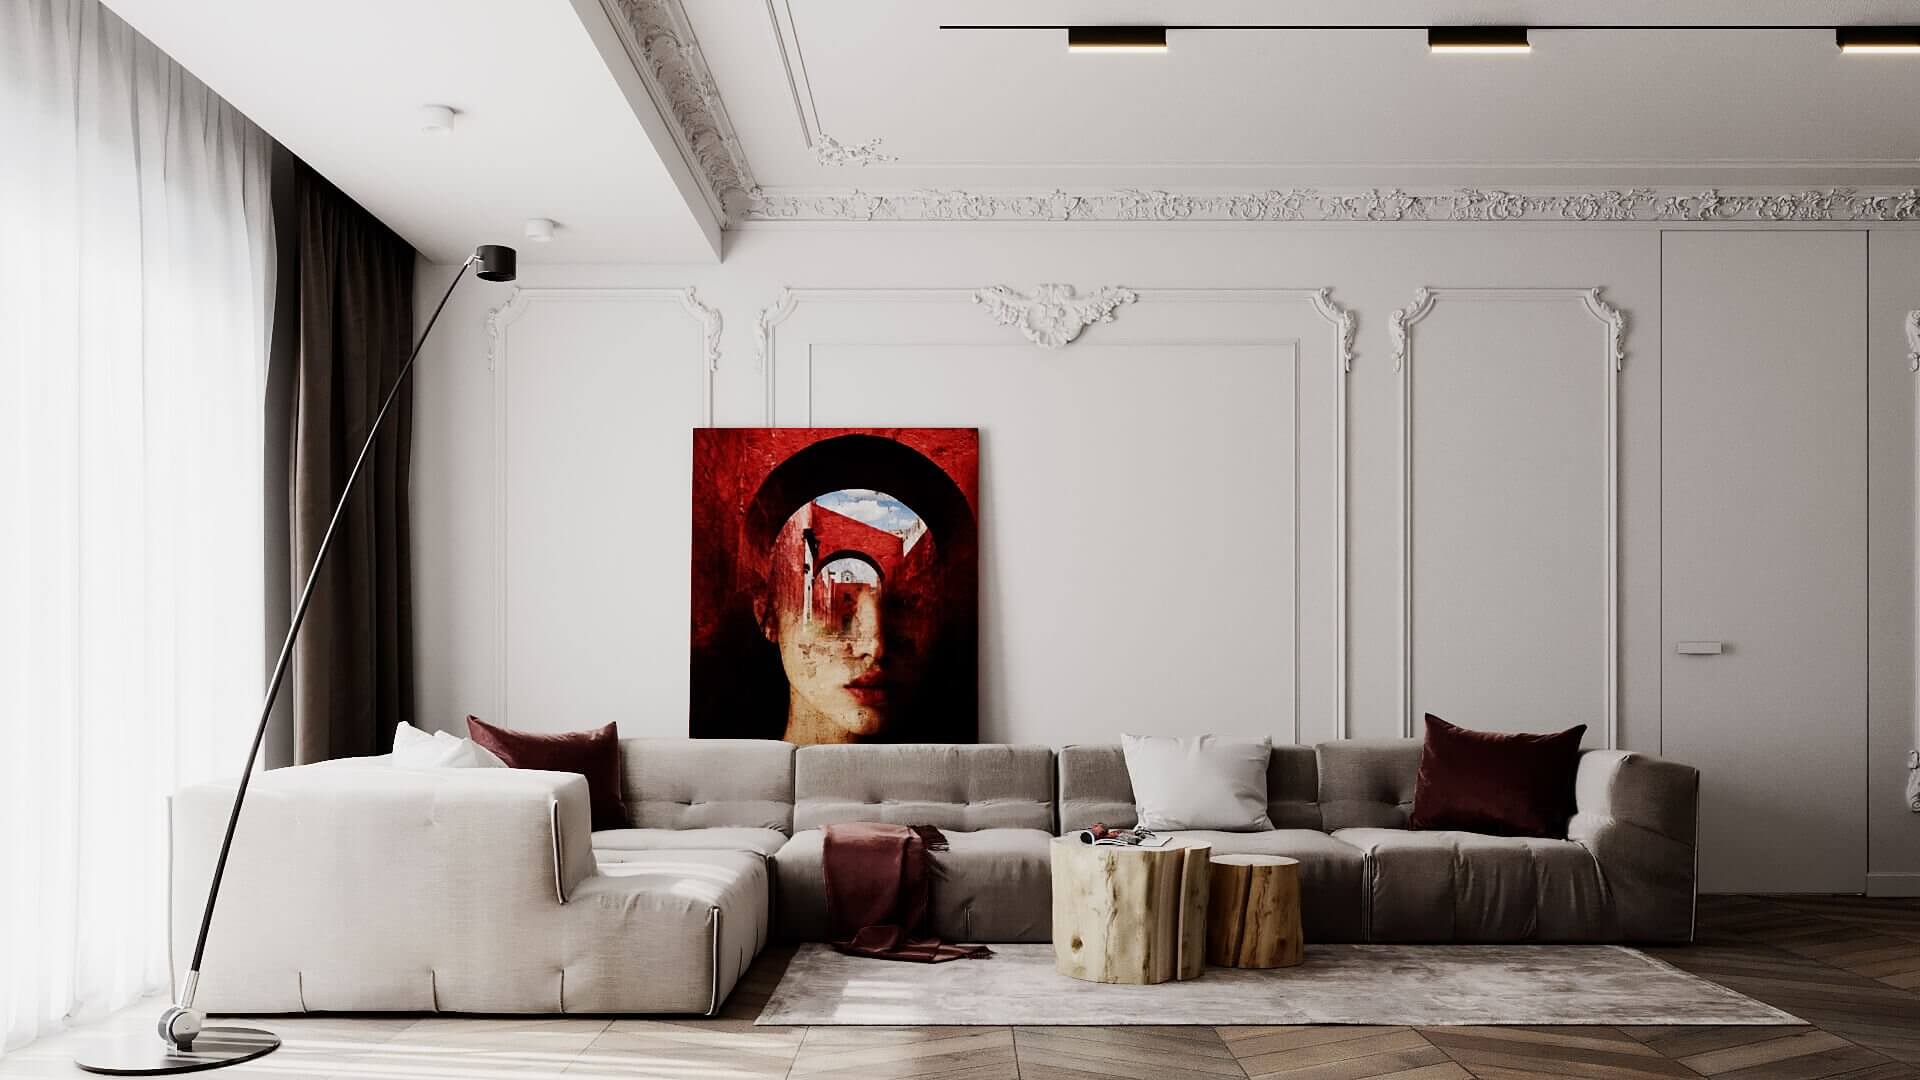 Bernardazzi Apartment living room floor lamp - cgi visualization